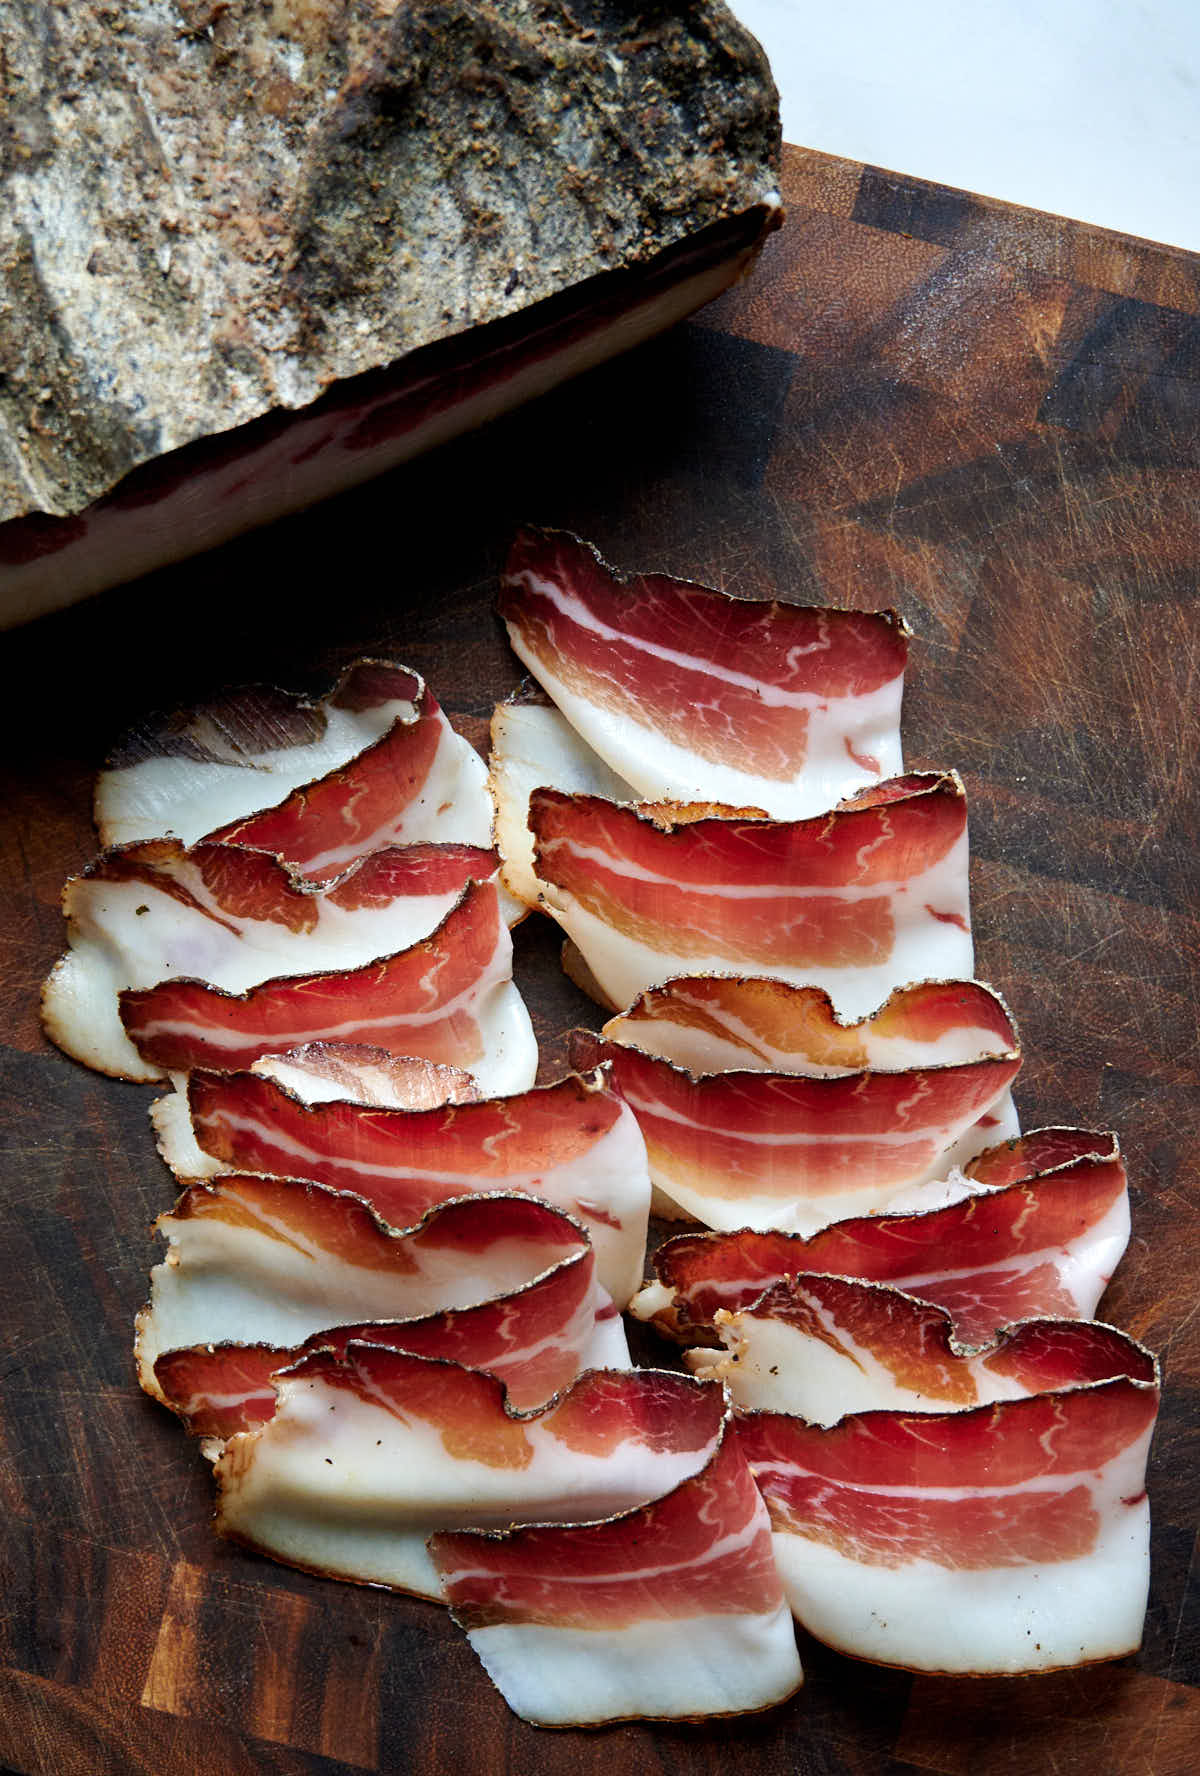 Speck - Italian dry-cured ham.